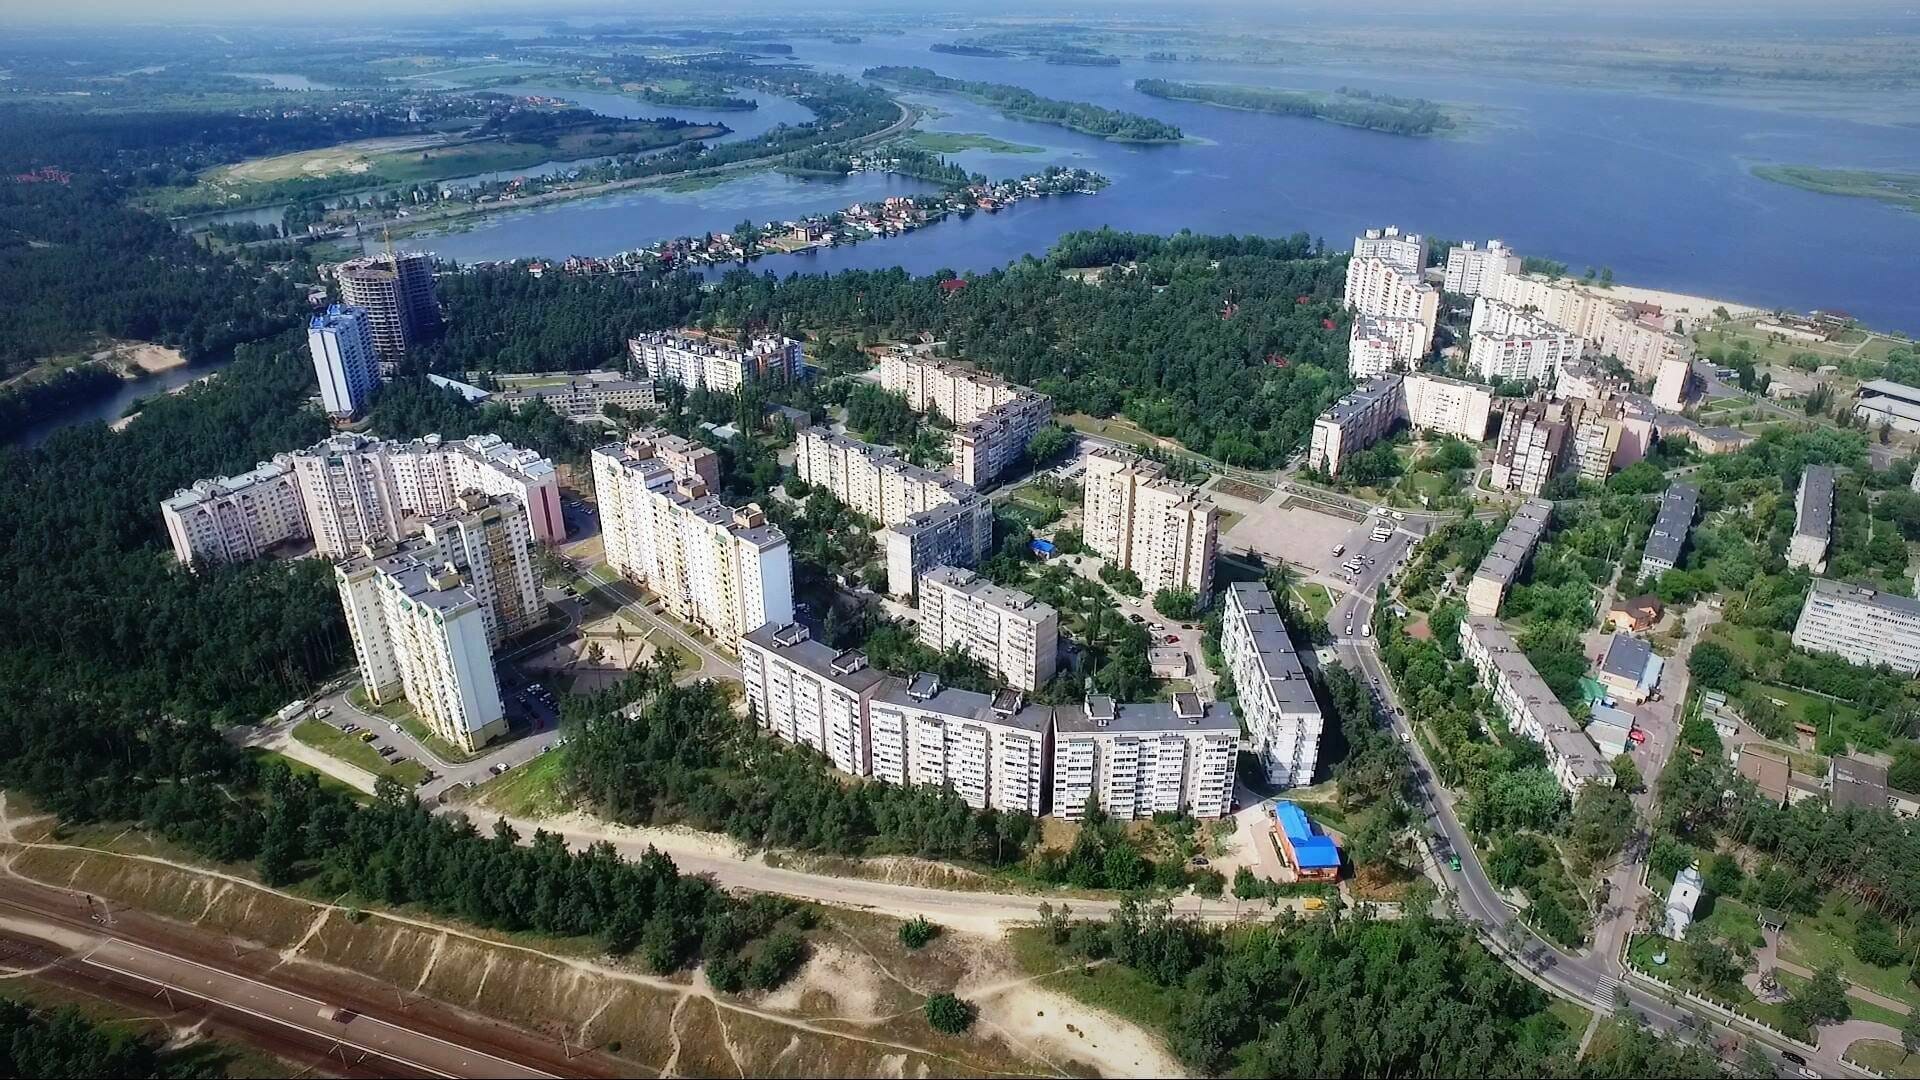 Ukrainka from a bird's eye view